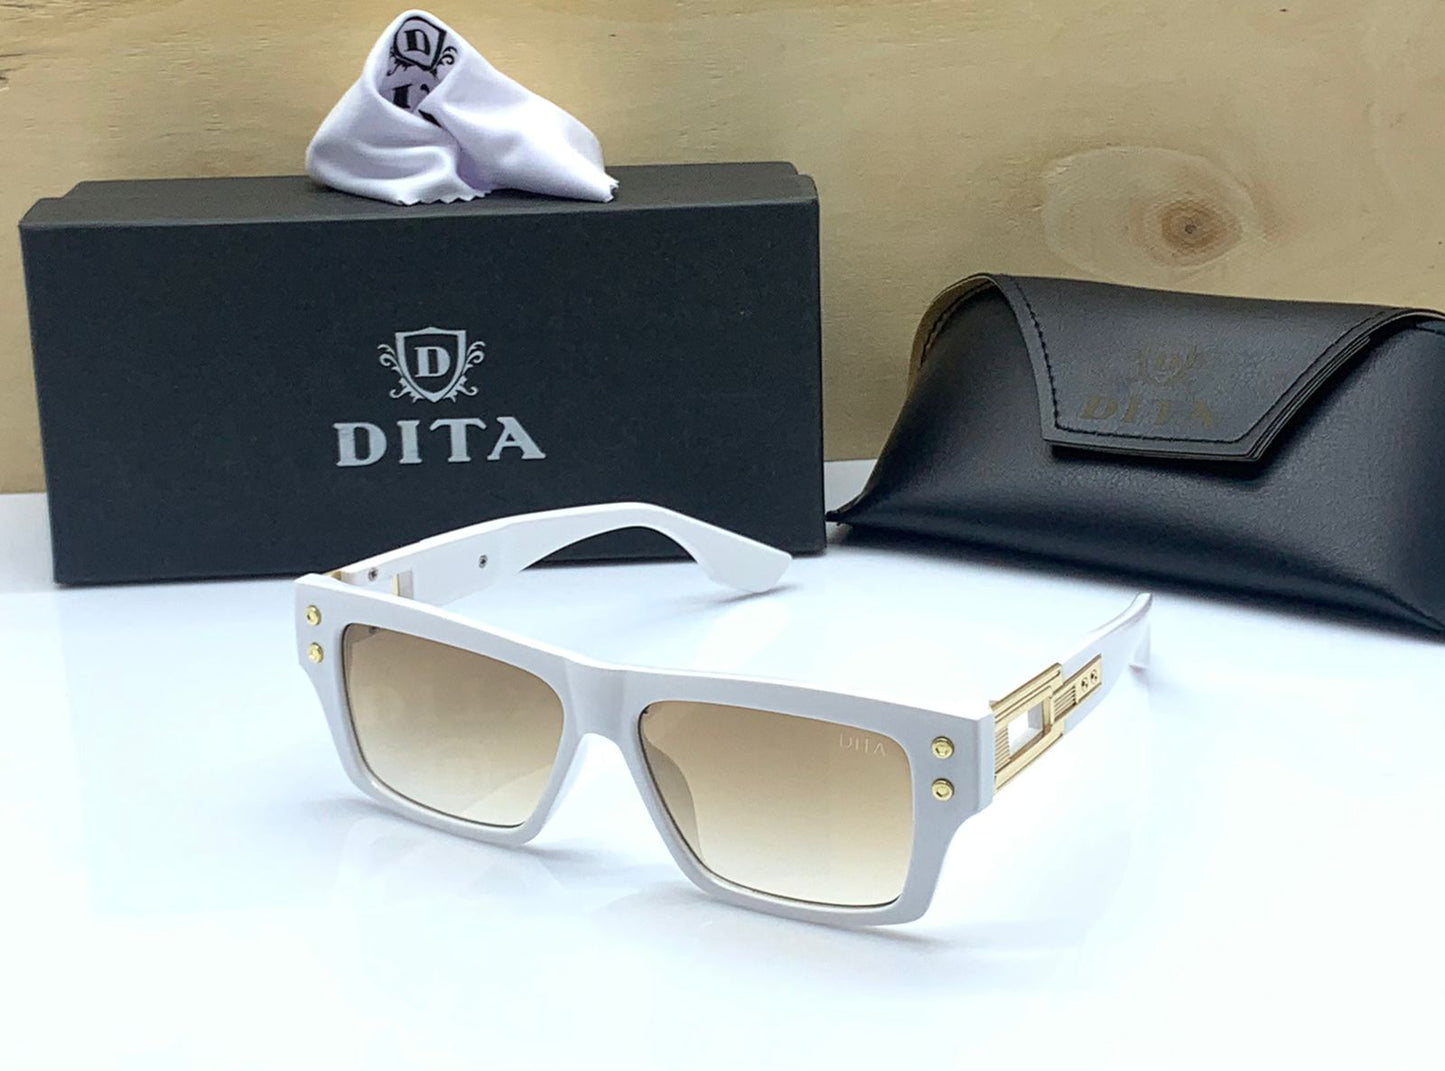 Dita Transparent Man's Women's Sunglass GRANDMASTER SEVENDTS407A-02 Golden And White Stick With White Frame Genuine Gift Sunglasses DT-407